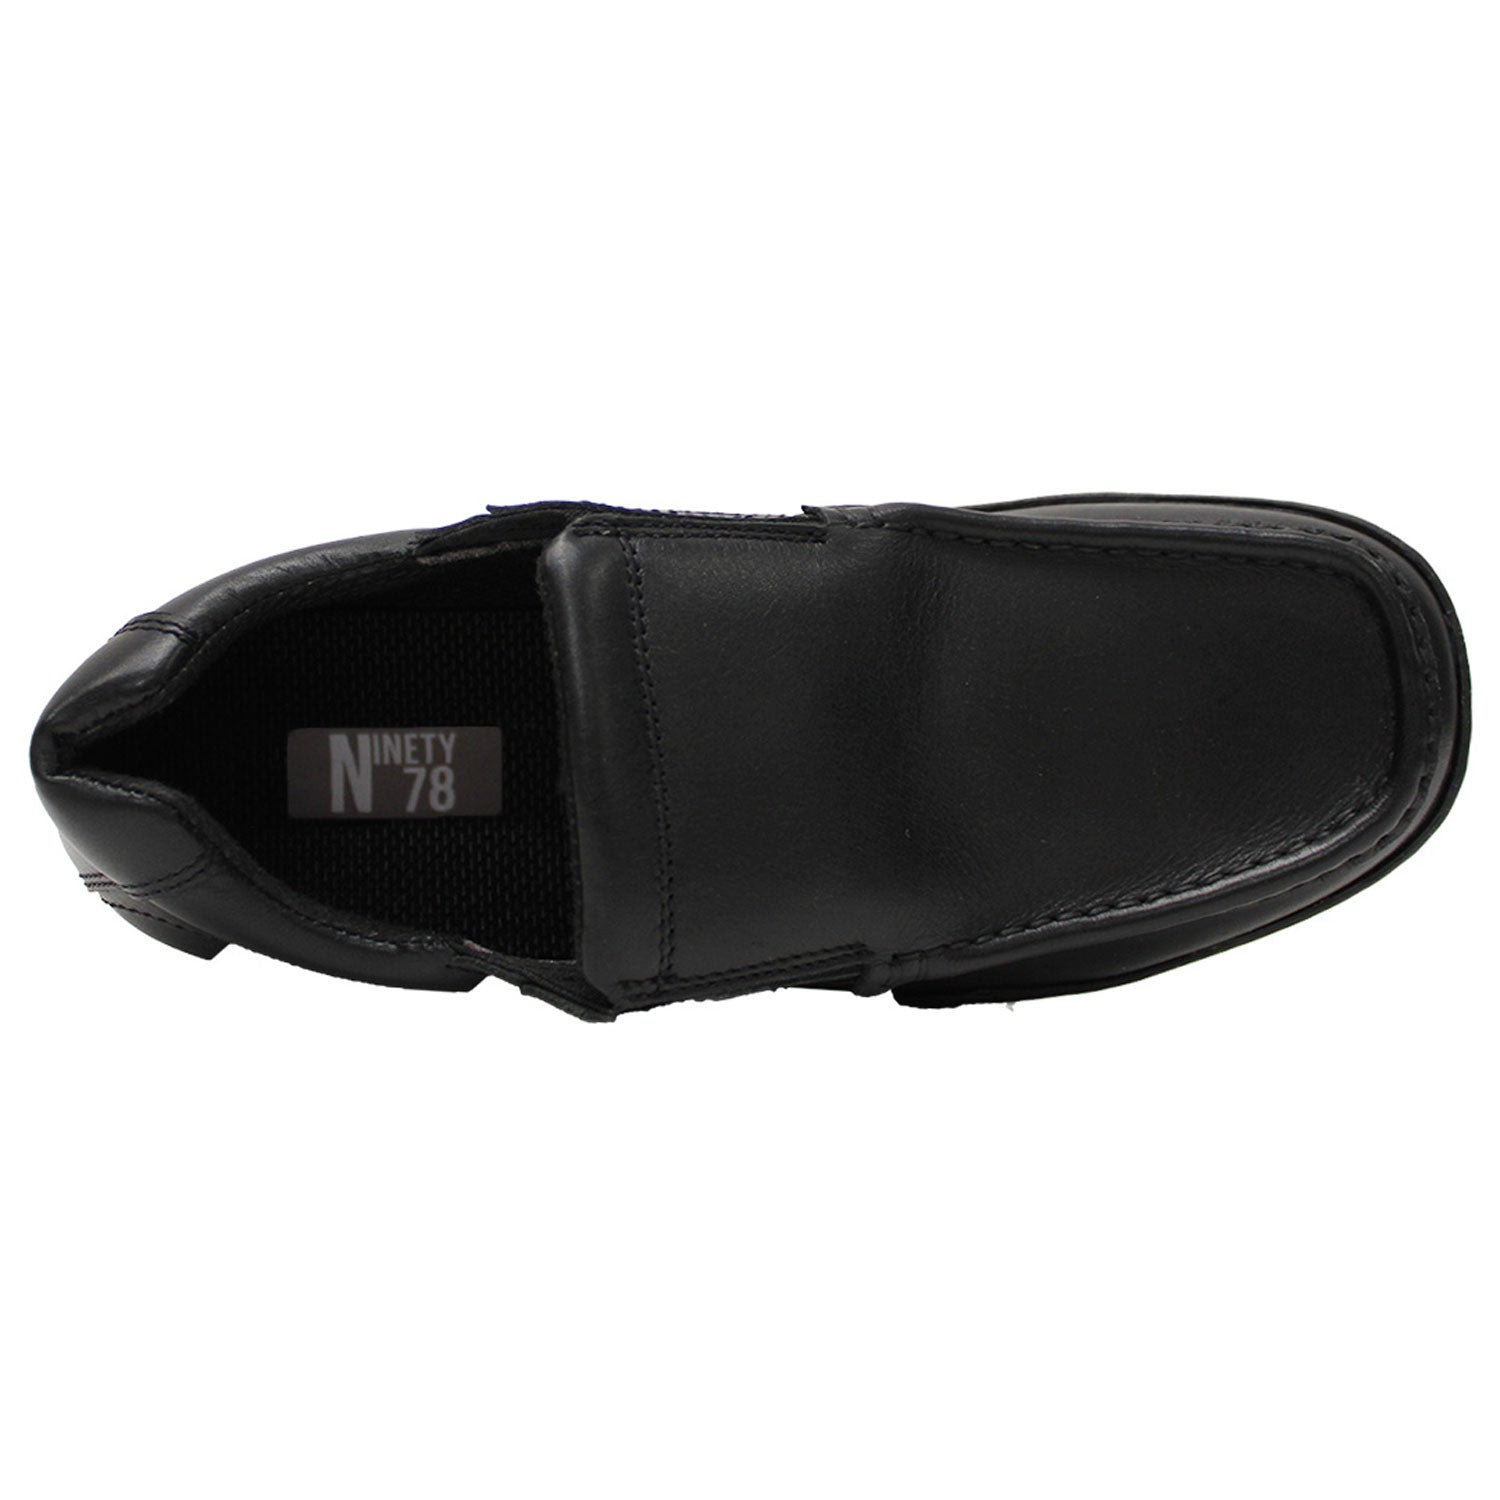 Ninety 78 Slip-on School Shoe - Black 3 Shaws Department Stores